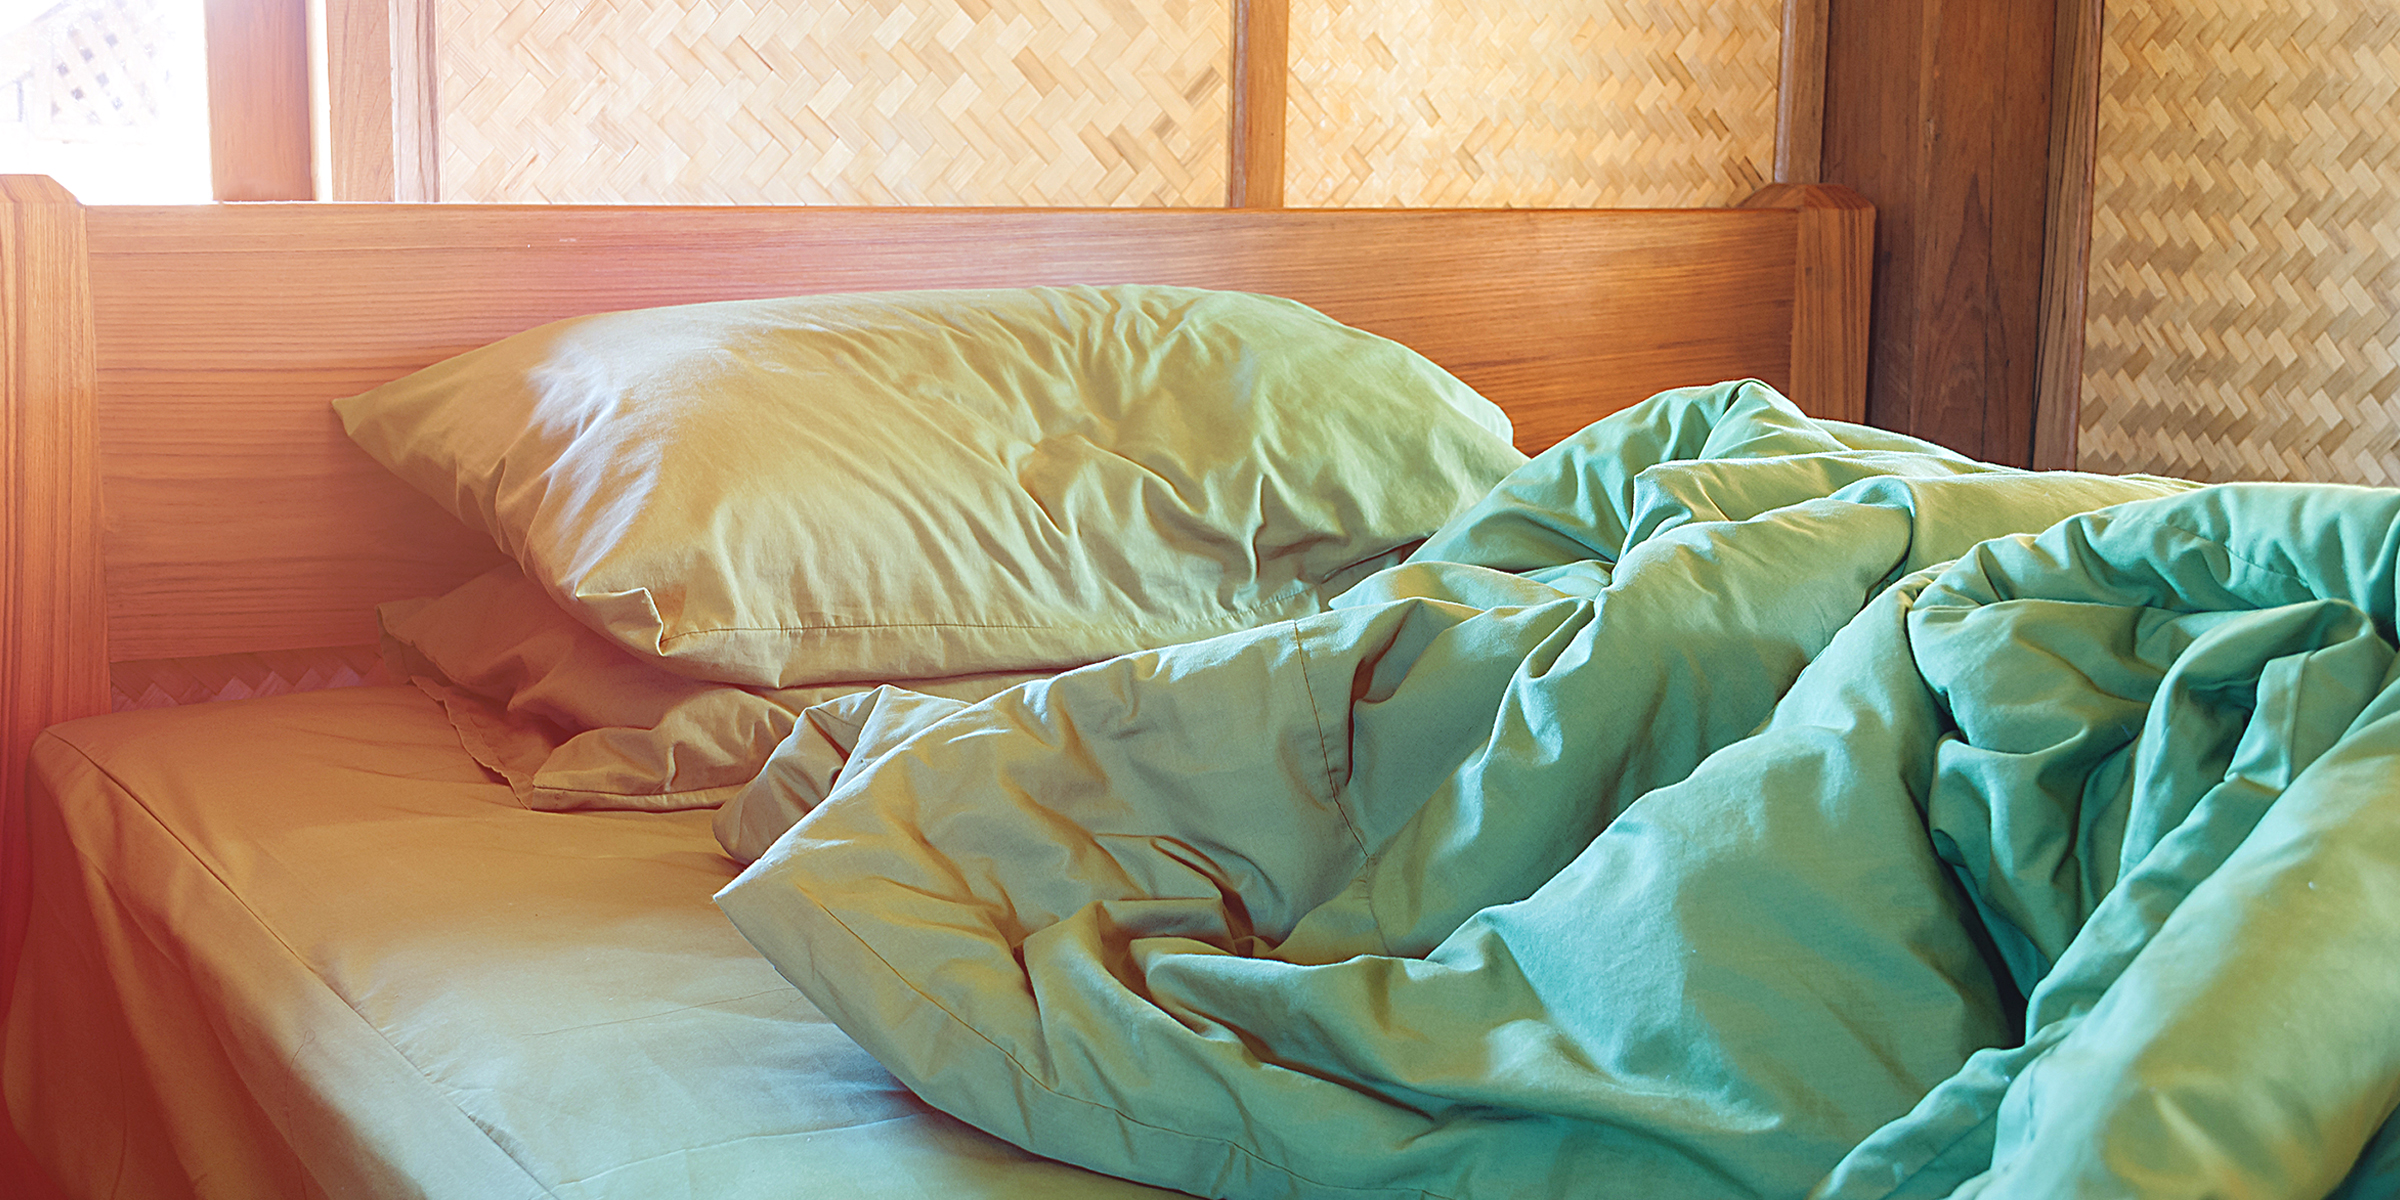 Ungemachtes Bett | Quelle: Shutterstock